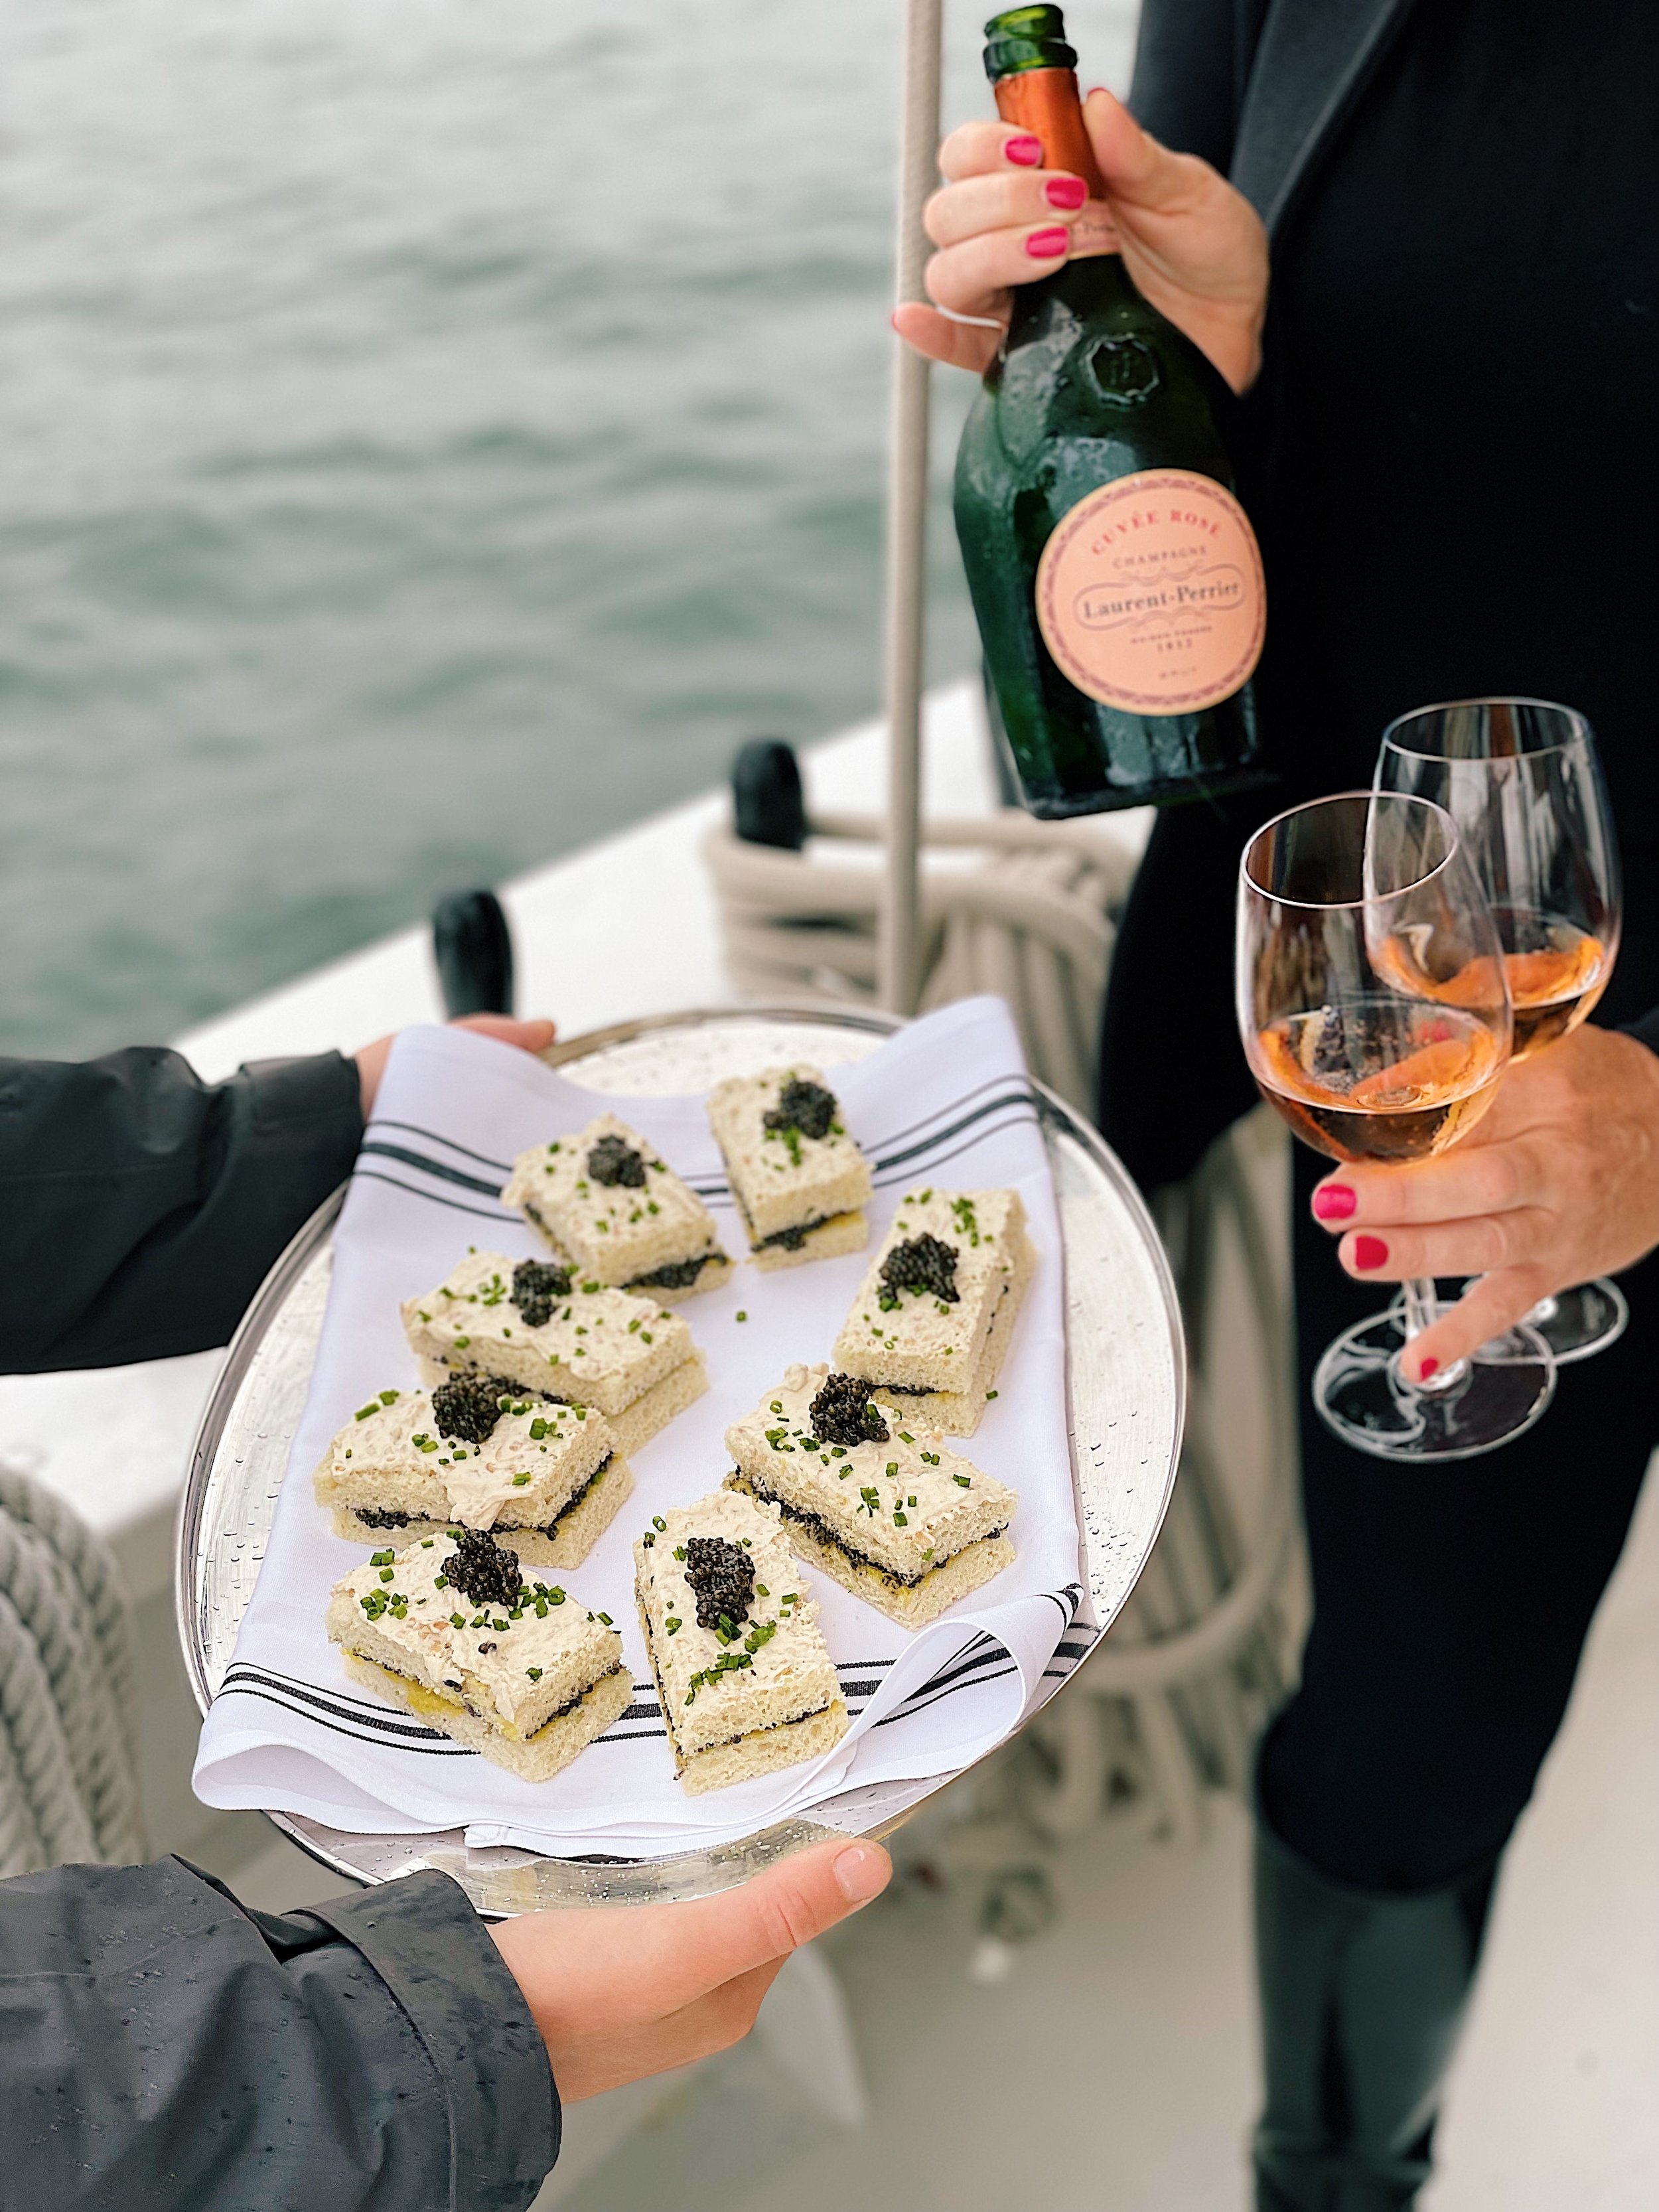 wine_wise_sail_portland_maine_food_chaval_baller_brunch_10032021_caviar_champagne.jpeg